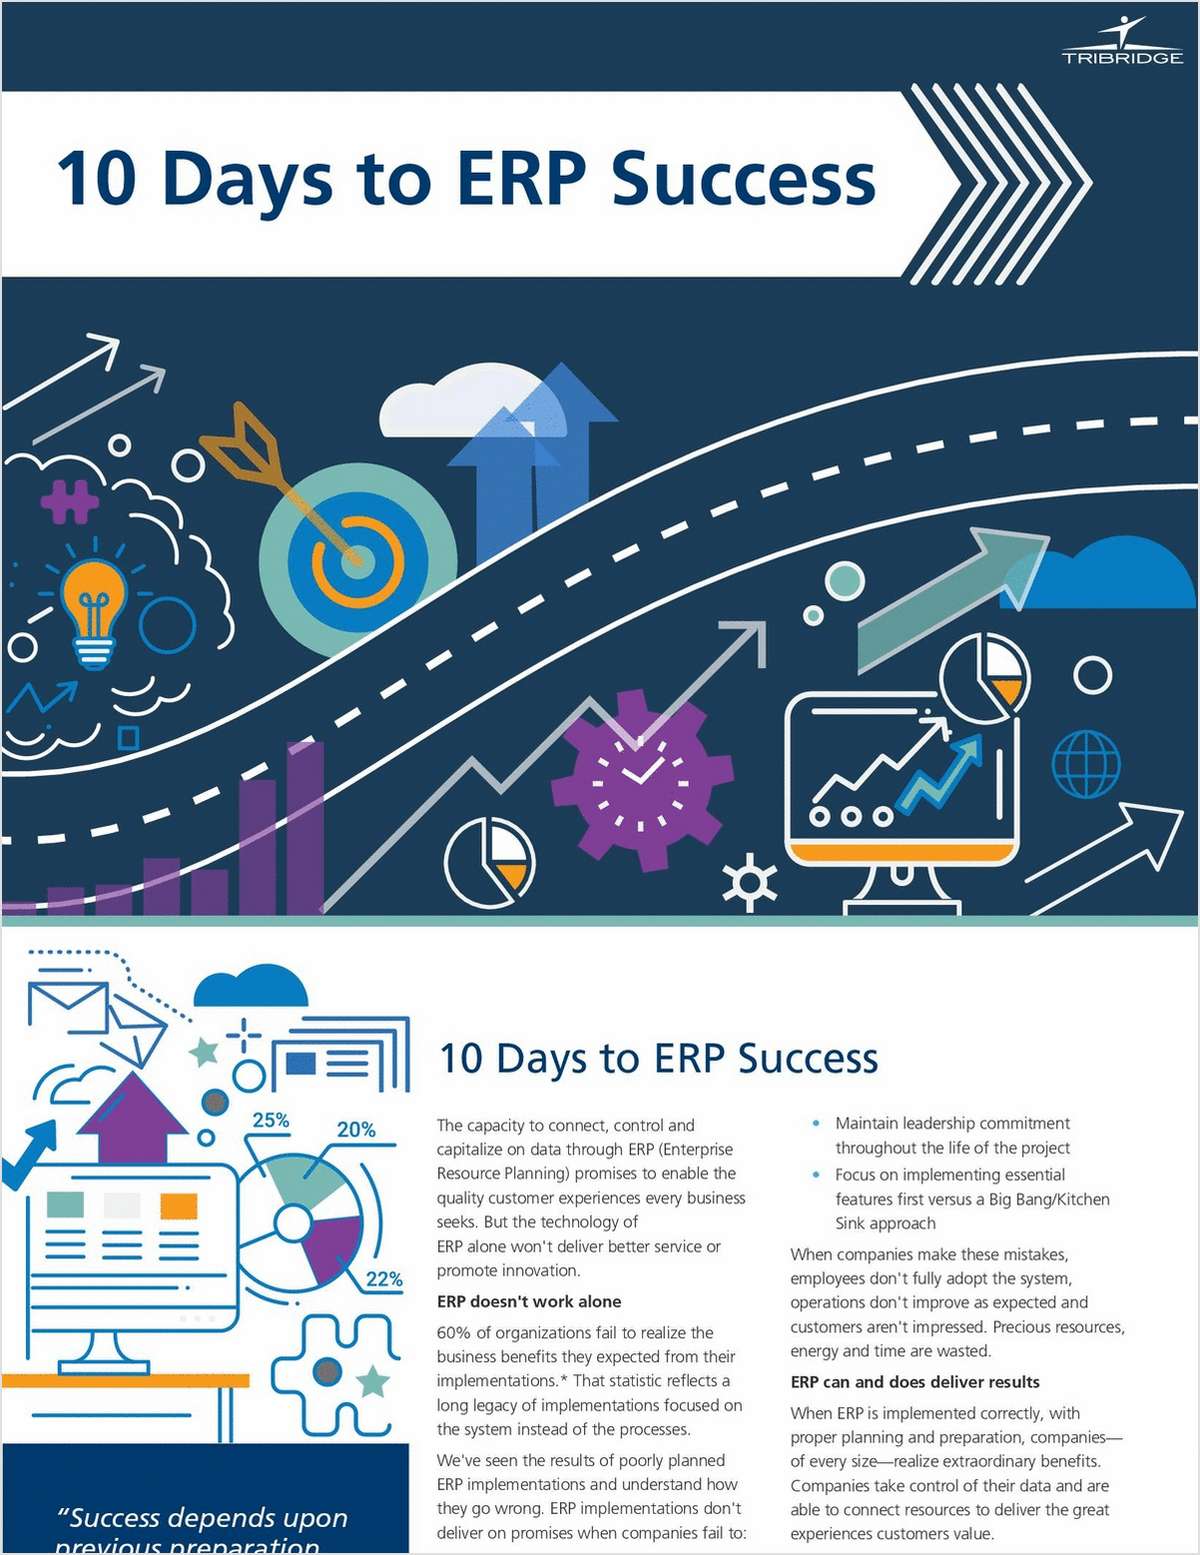 10 Days to ERP Success